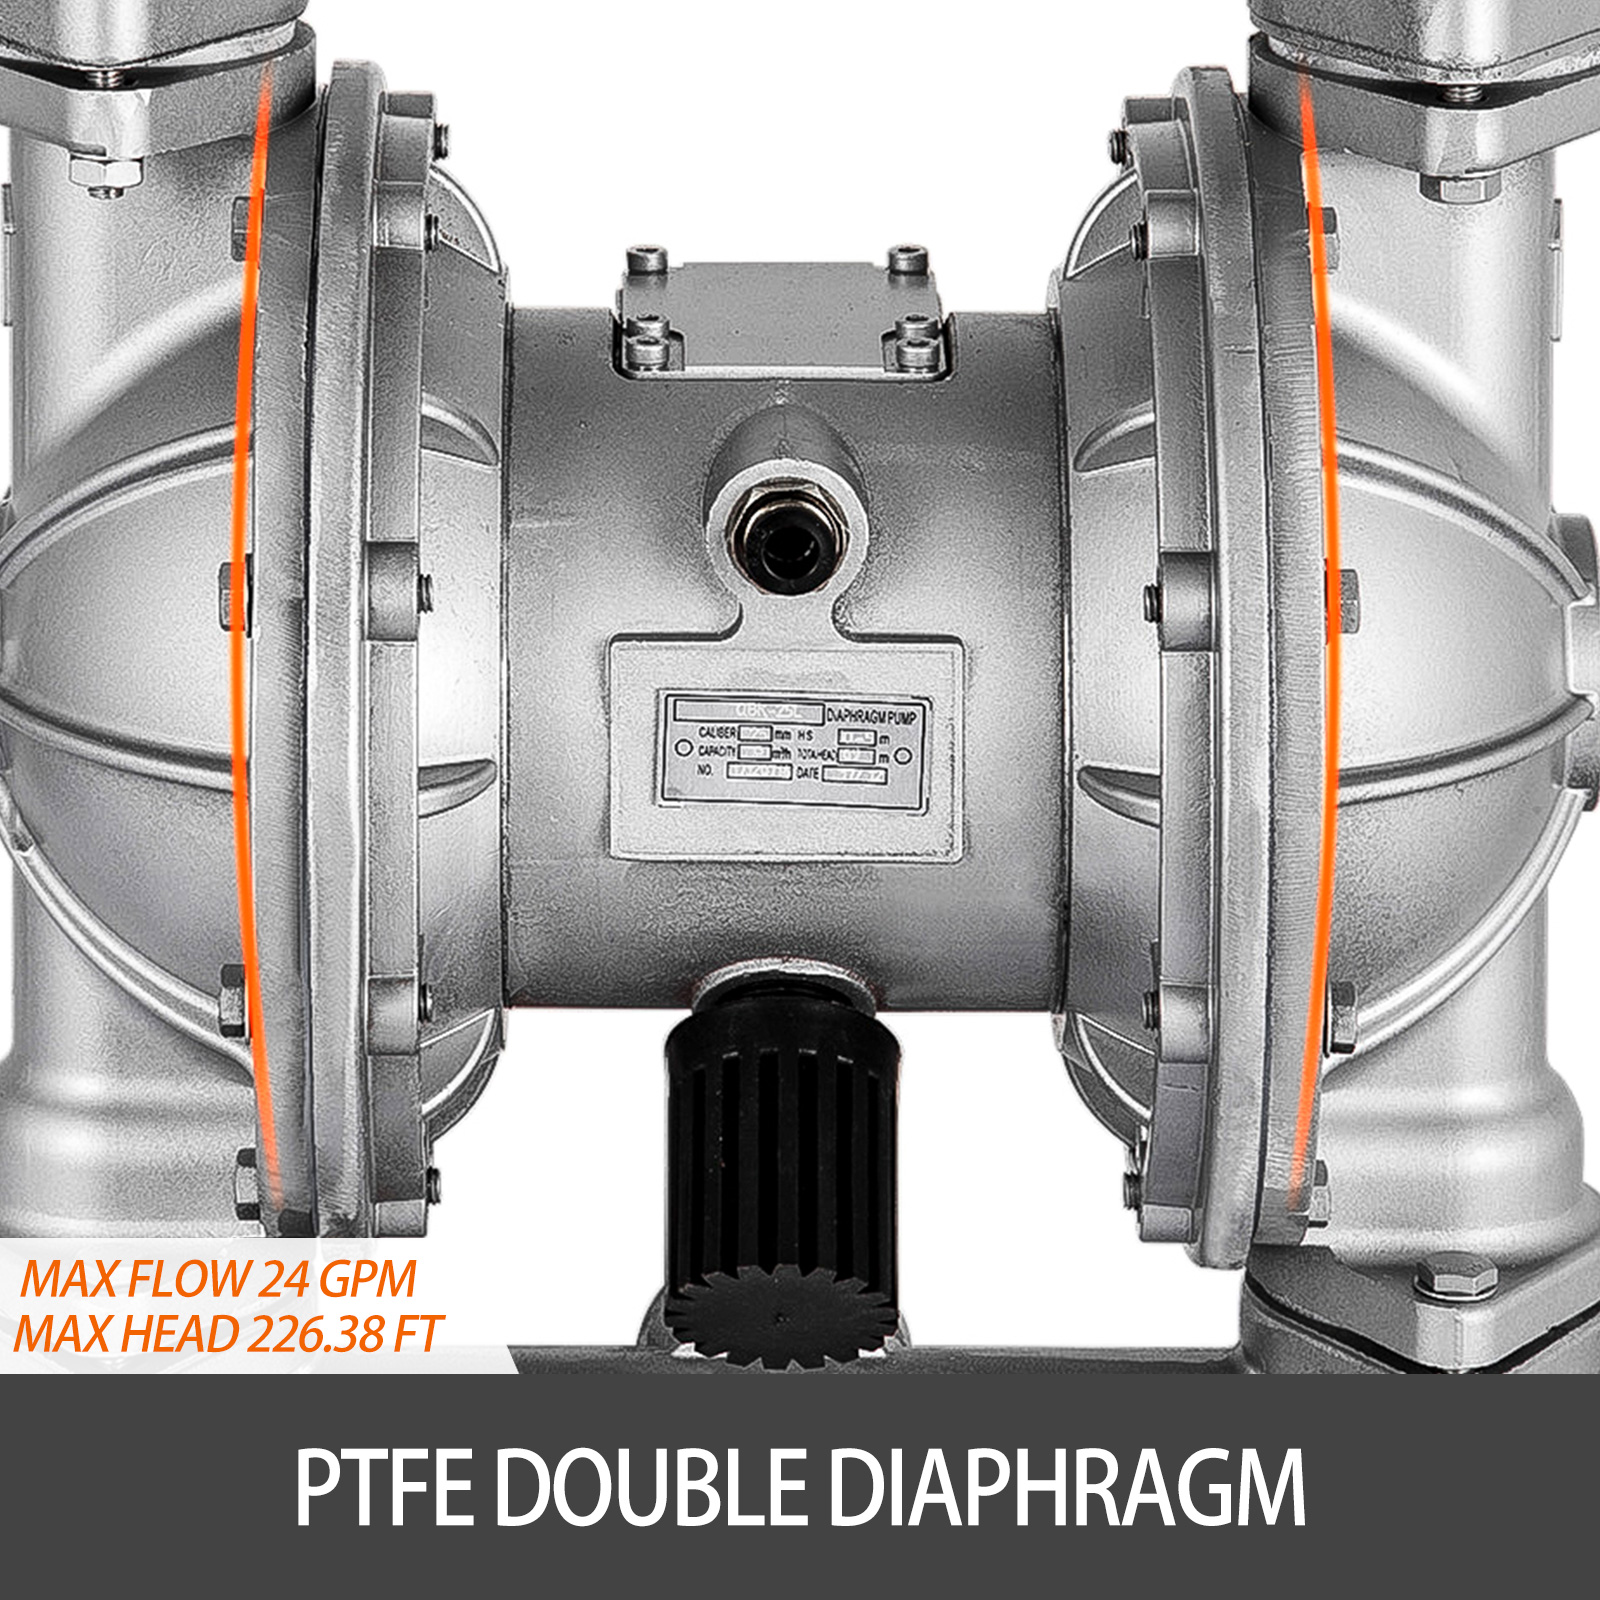 Details about   44GPM Air Operated Double Diaphragm Pump Petroleum Fluids 1-1/2" Inlet & Outlet